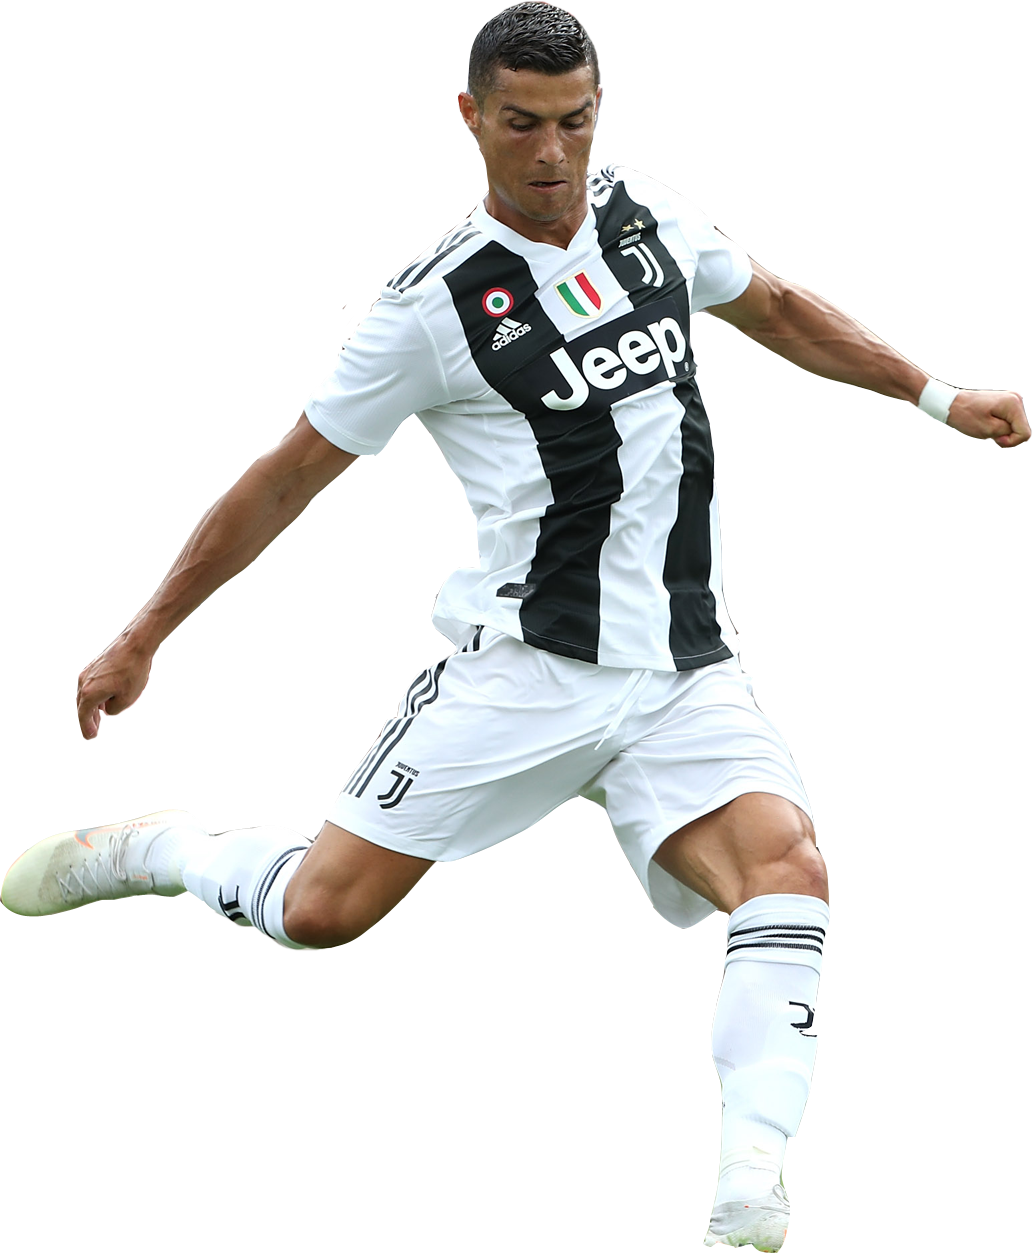 Ronaldo FIFA PNG Picture